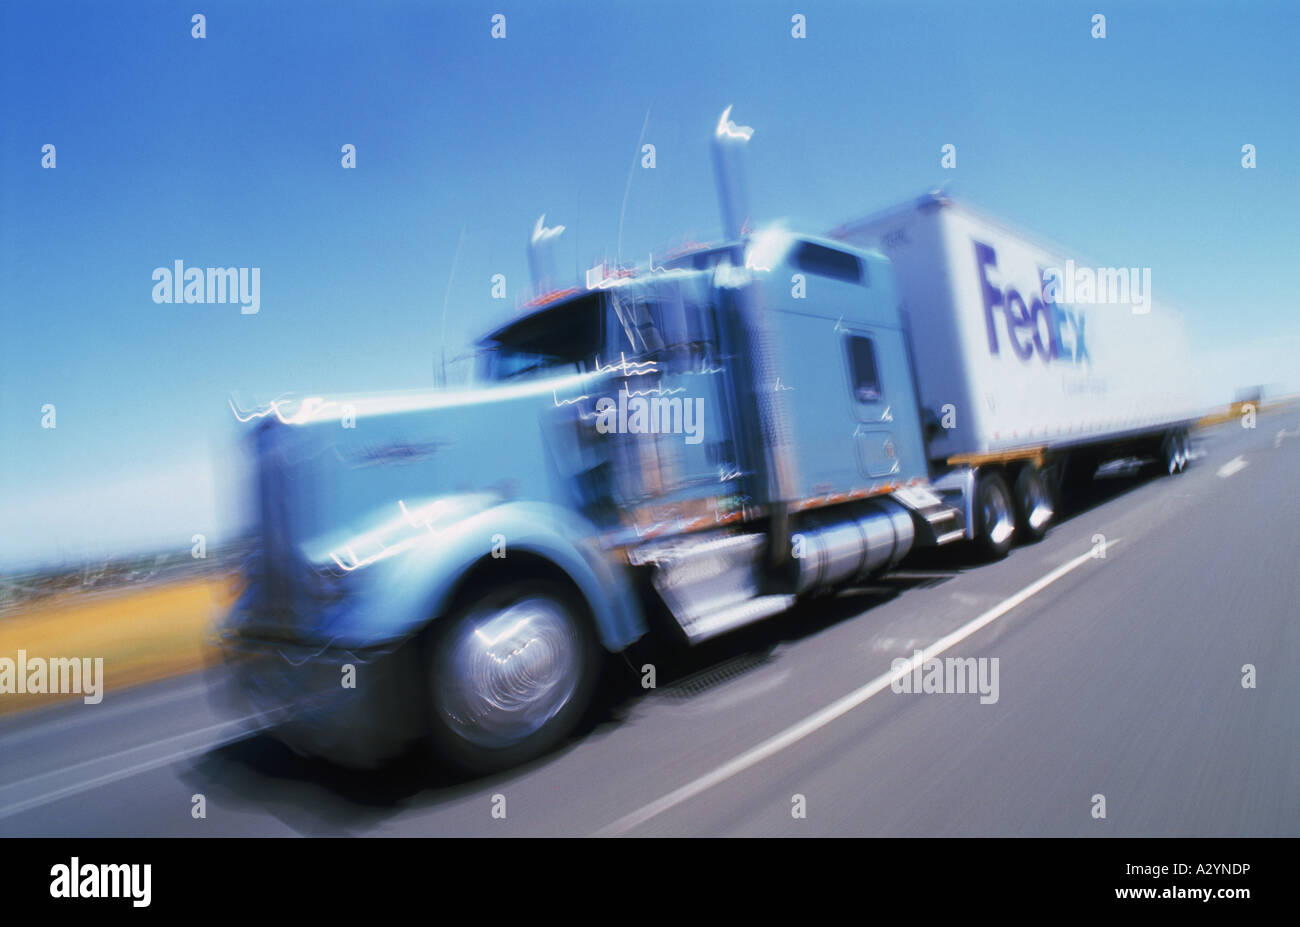 Federal Express Truckracing California Highway Stockfoto